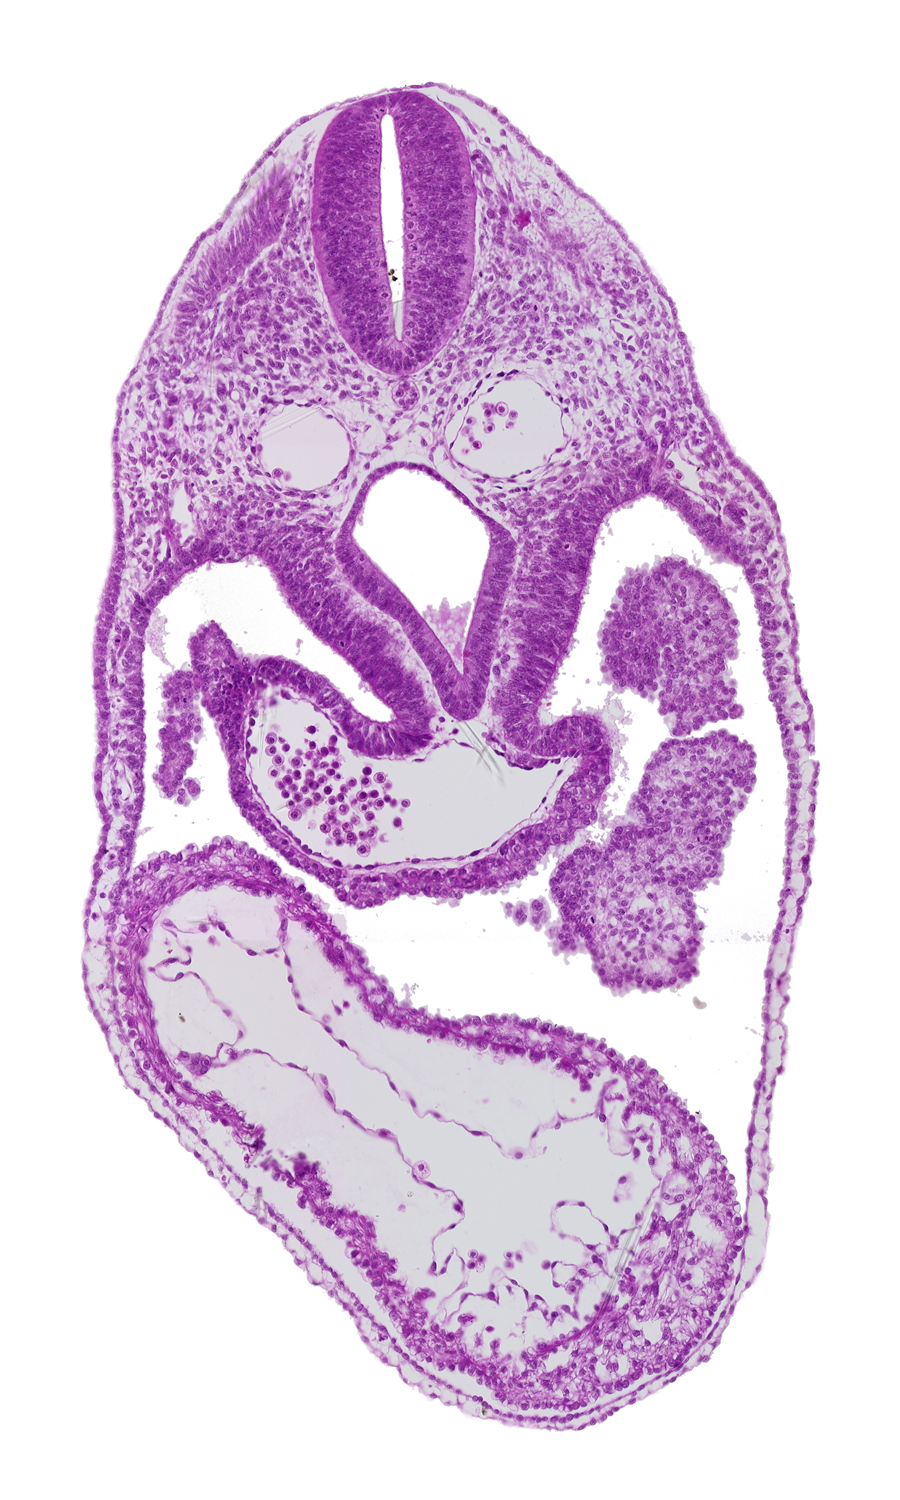 dermatomyotome 4-5 intersegmental region, dorsal aorta, foregut, interventricular foramen, junction of rhombencephalon and spinal cord, left ventricle, pericardial cavity, precardinal vein, right ventricle, septum transversum, sinus venosus